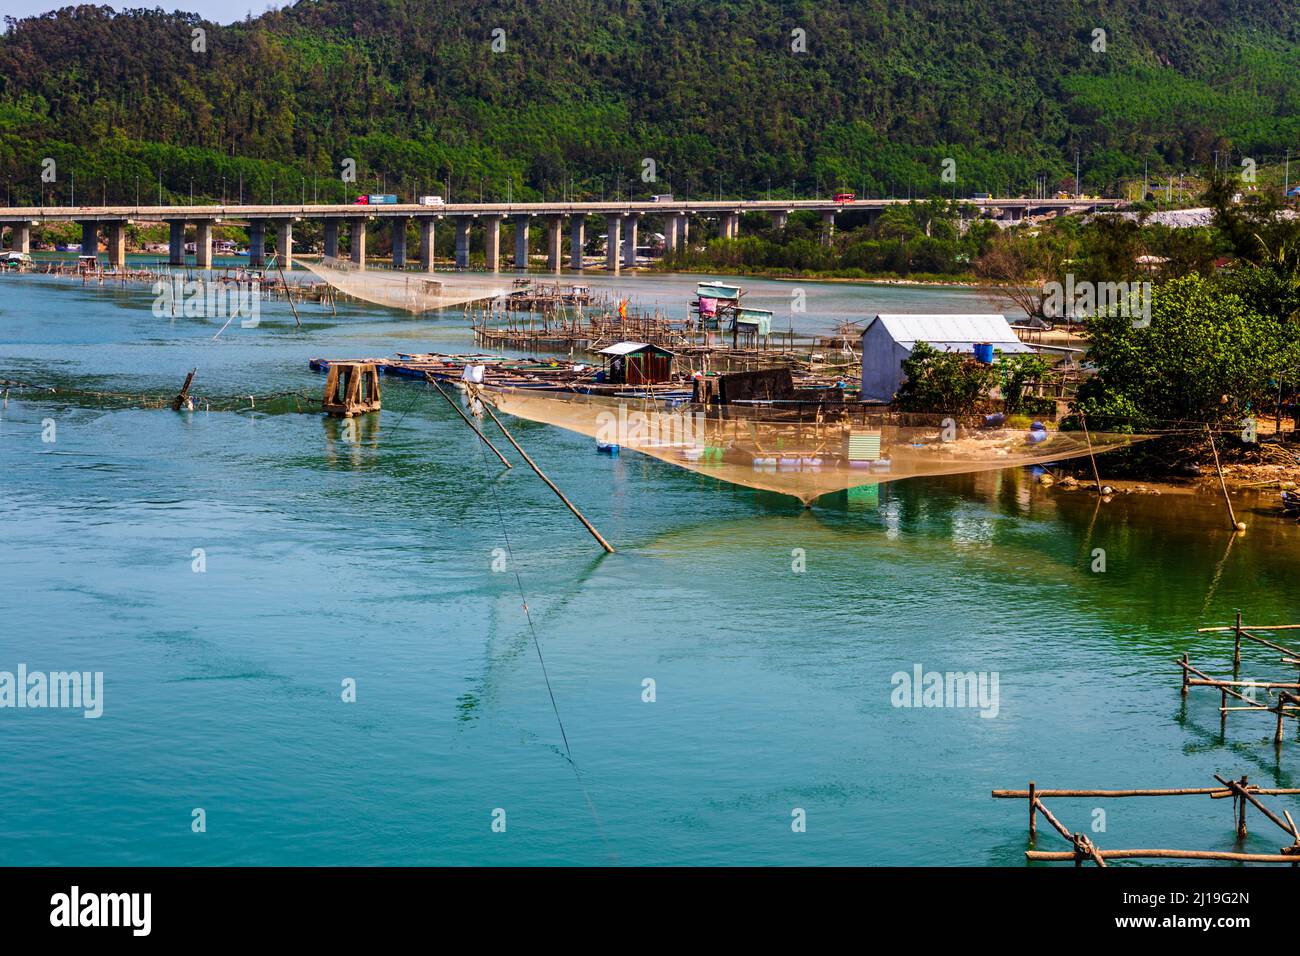 Un pequeño pueblo pesquero Lang Co ensenada entre varios puentes de carretera. Una gran red de pesca de color naranja sobre agua de color aguamarina. Foto de stock